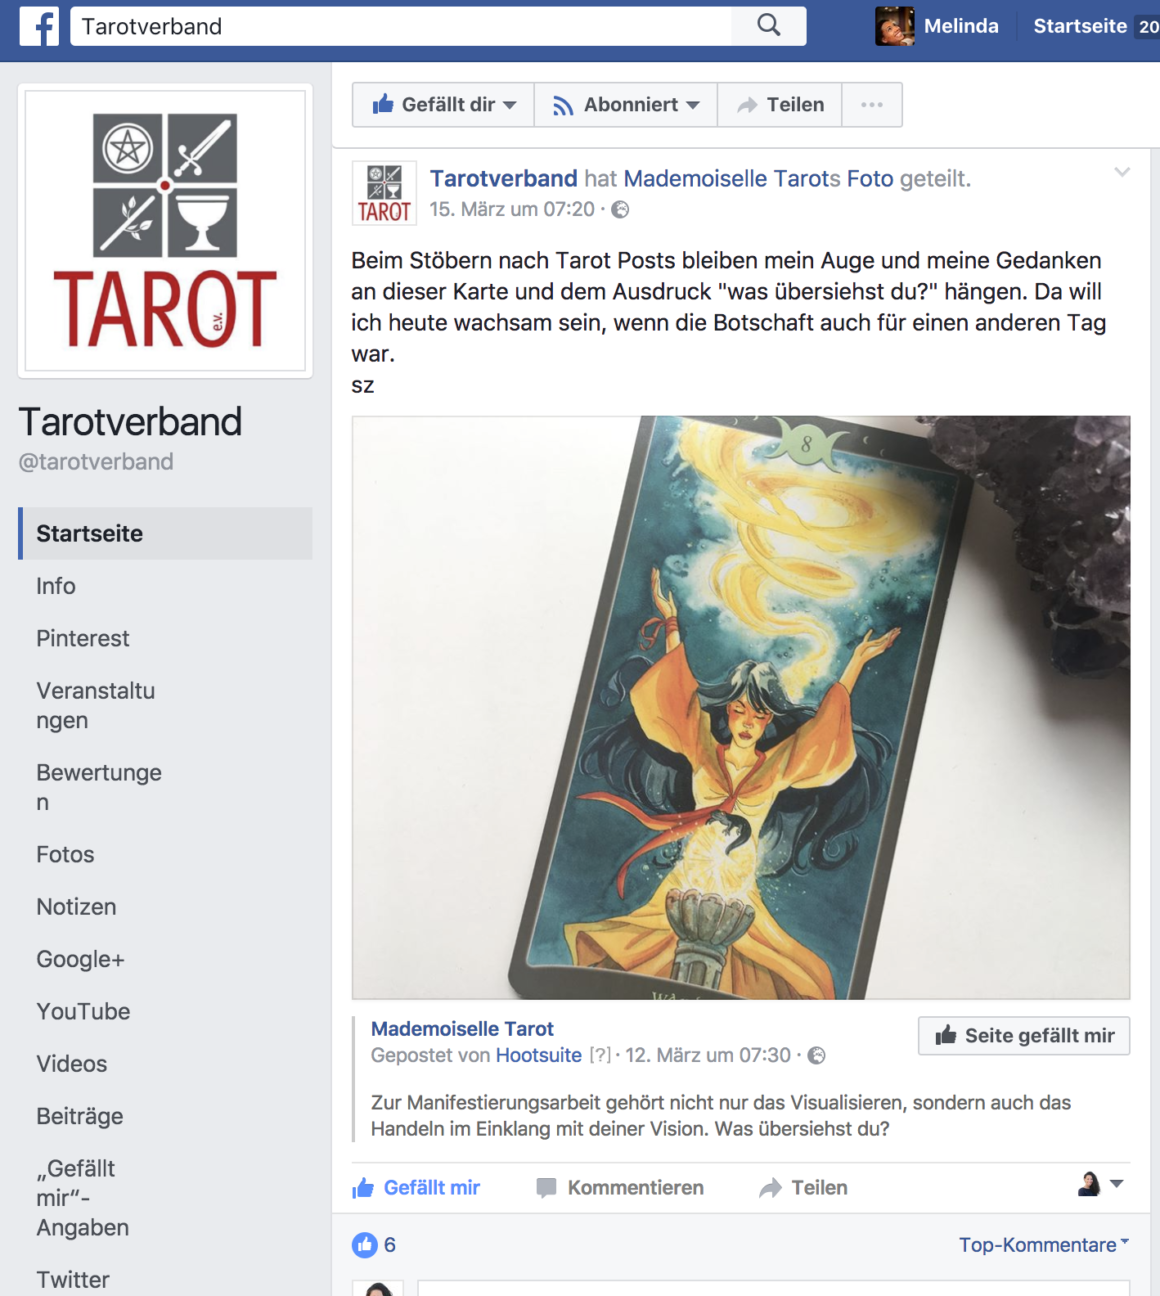 Tarotverband, Tarot e.V., Tarotverband Deutschland, Tarot Deutschland, Tarotverband Facebook, Tarot Facebook, PR für changelicious, PR changelicious, PR Mademoiselle Tarot, PR 2017,